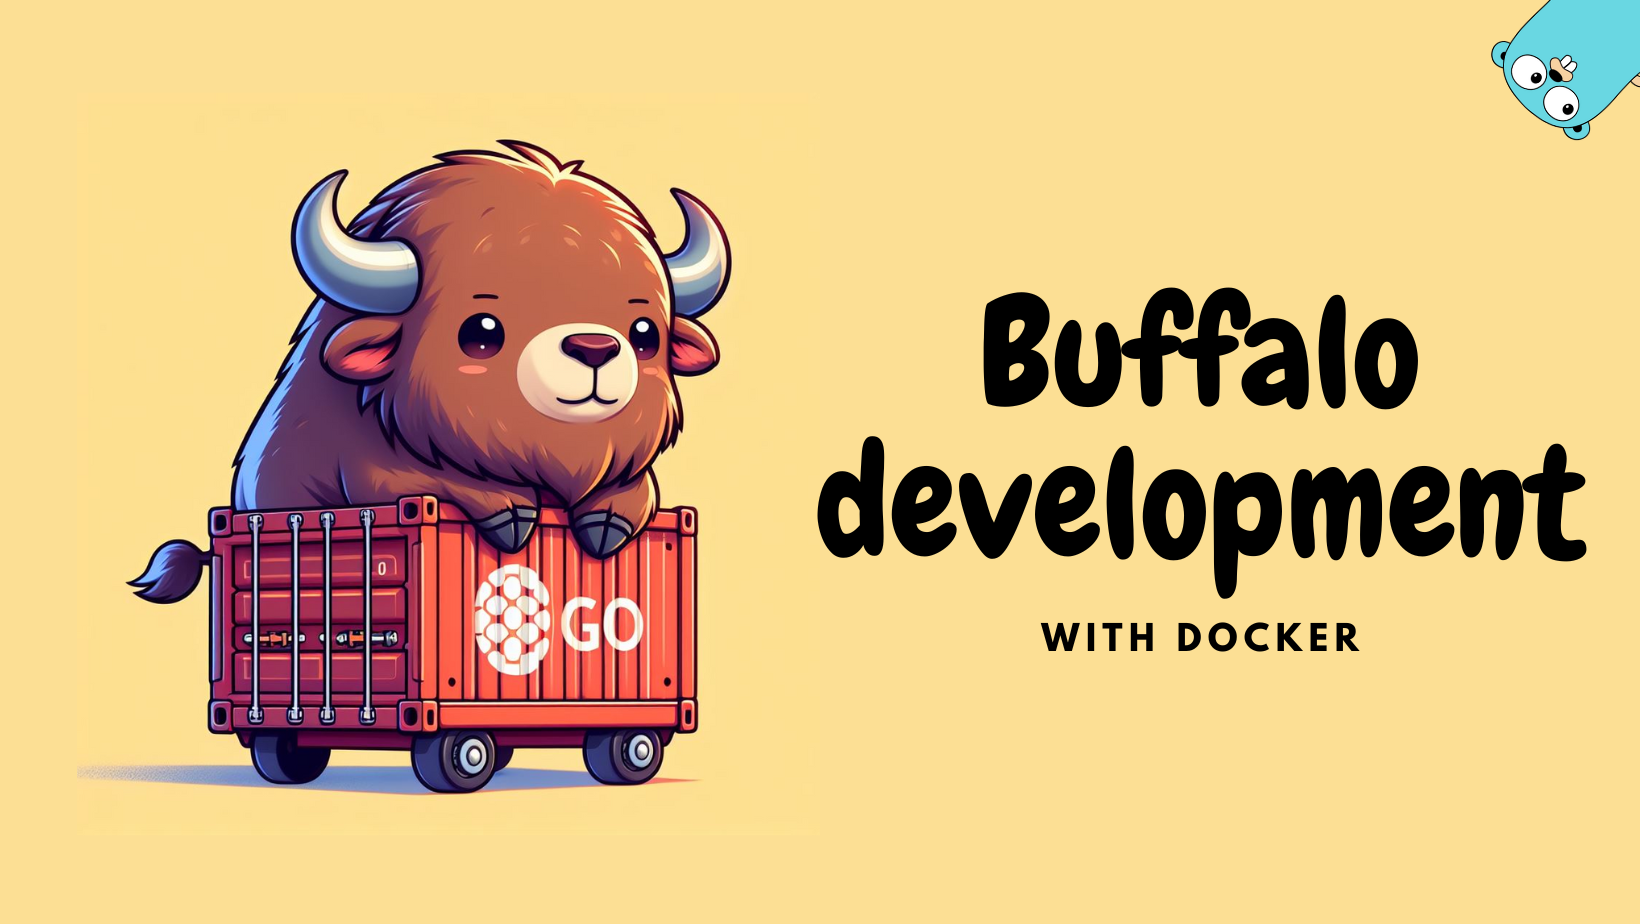 Buffalo development with Docker - cover image